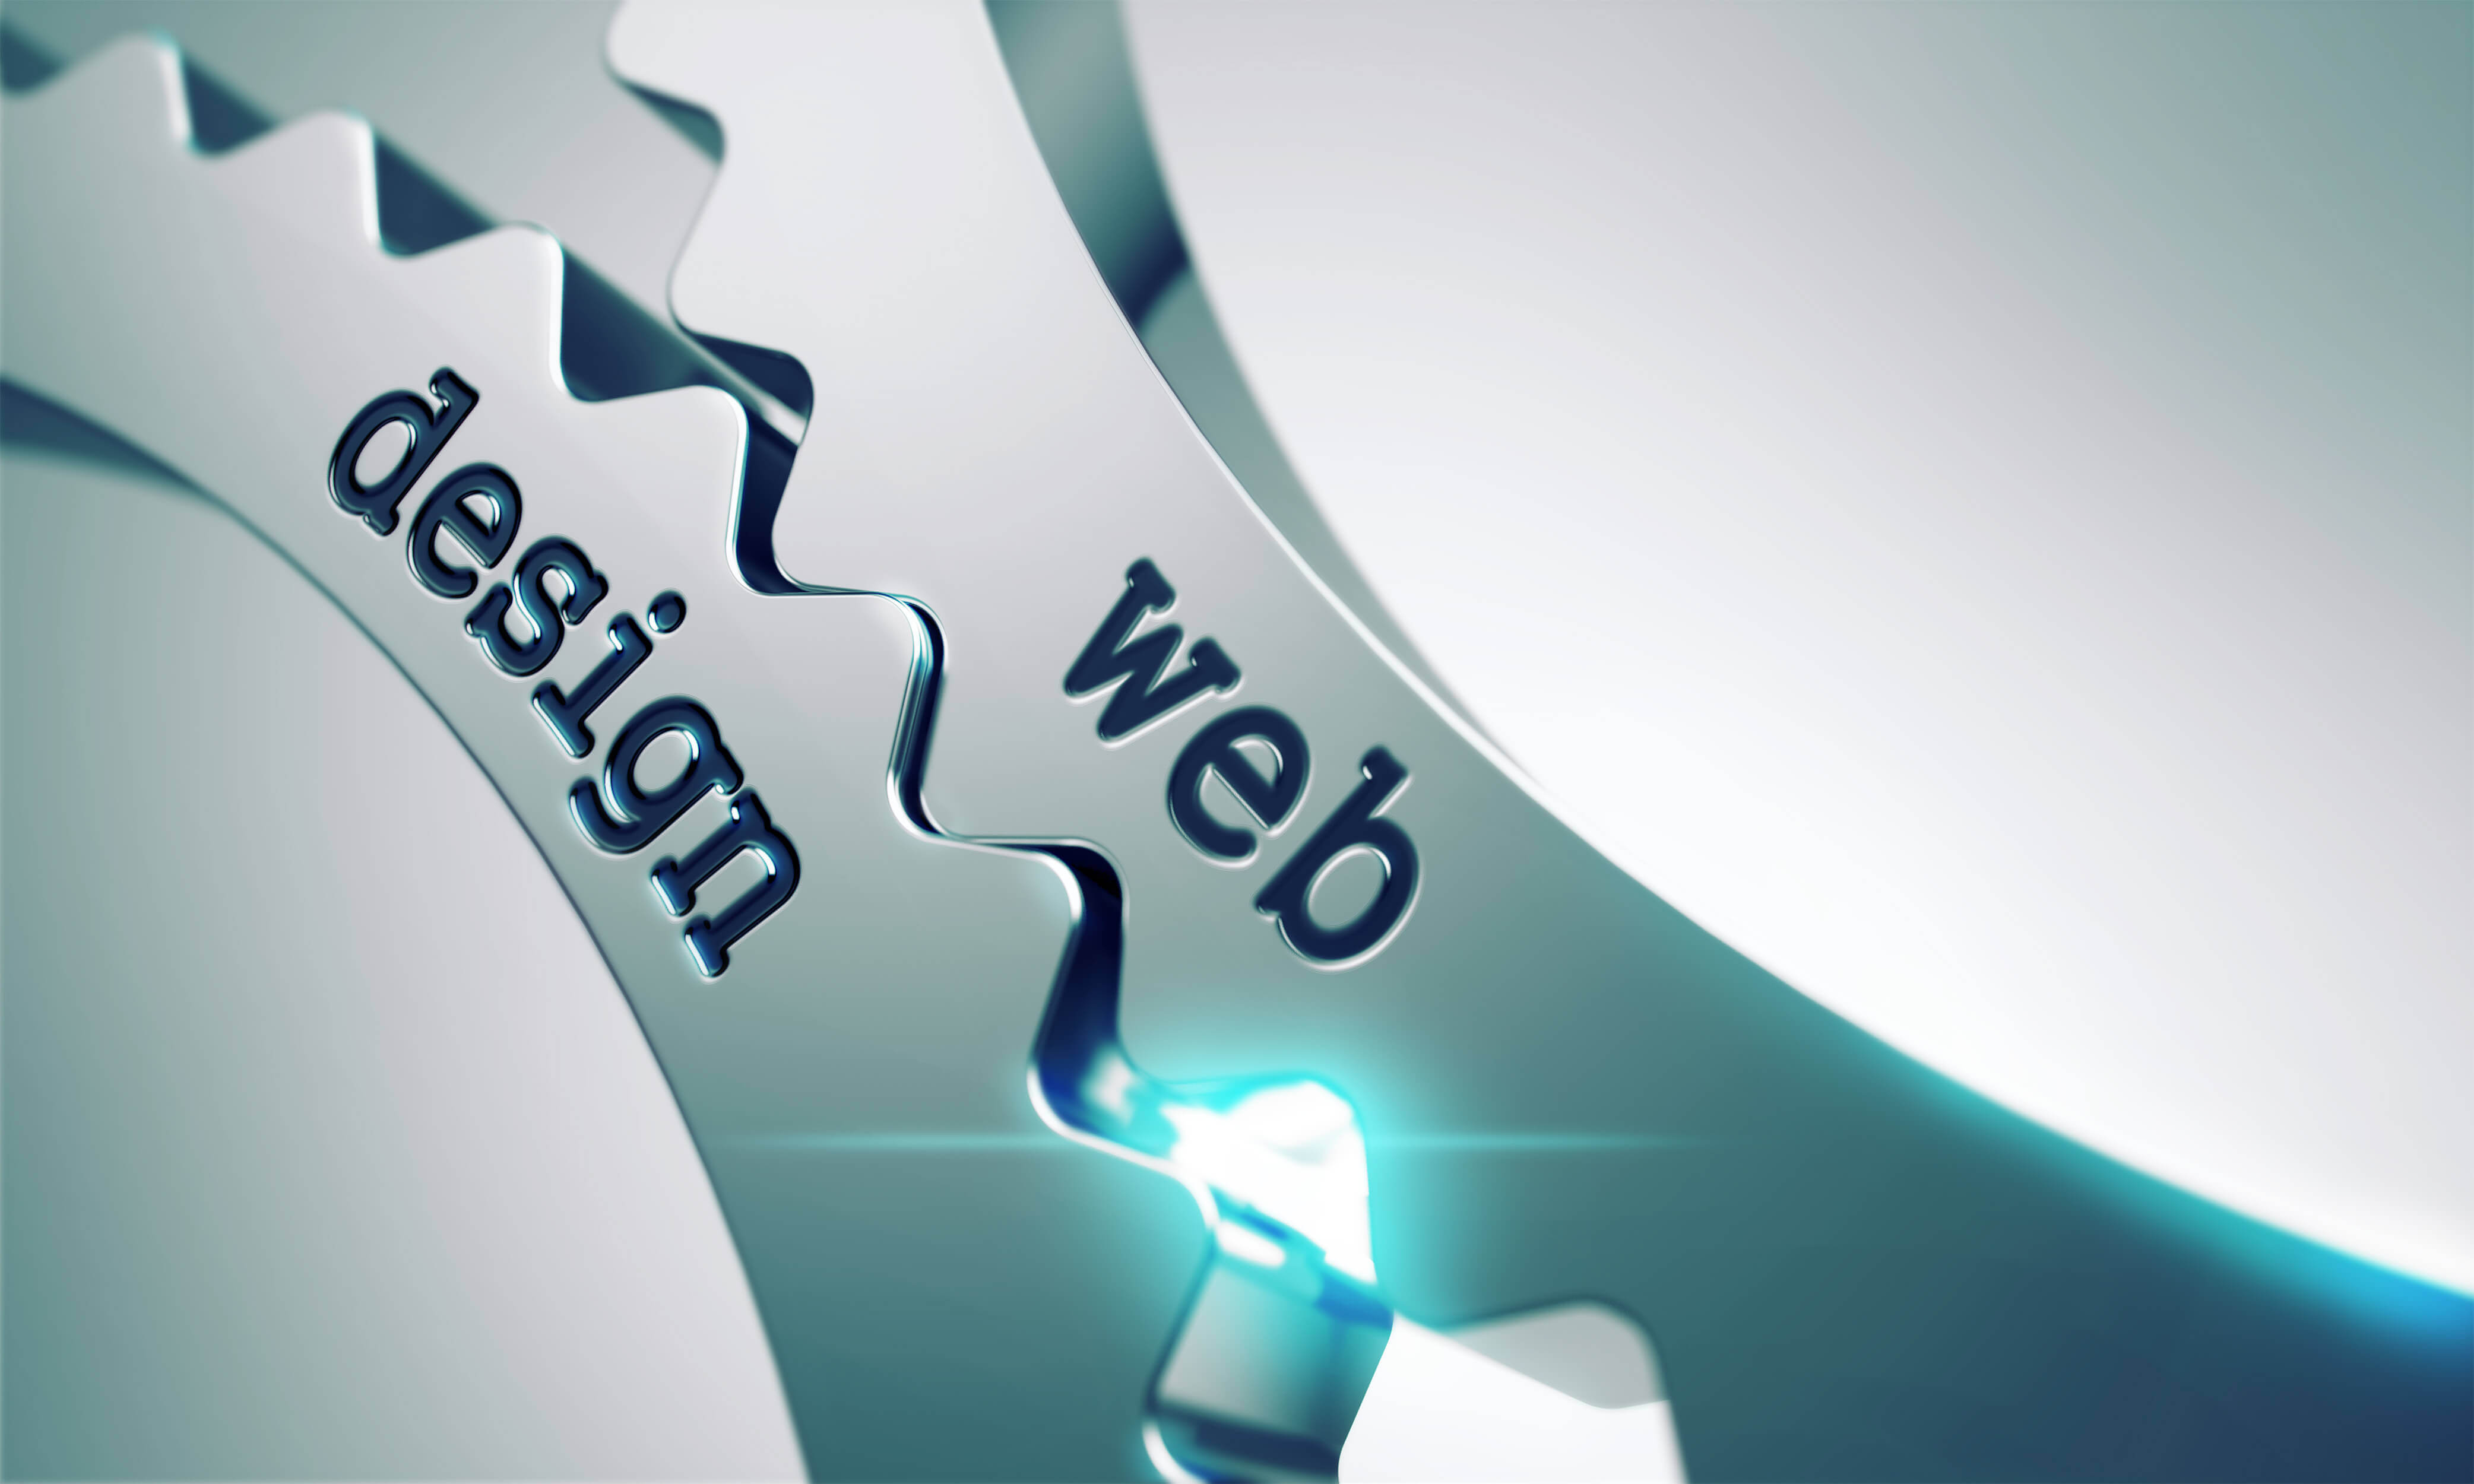 The profesional web design company